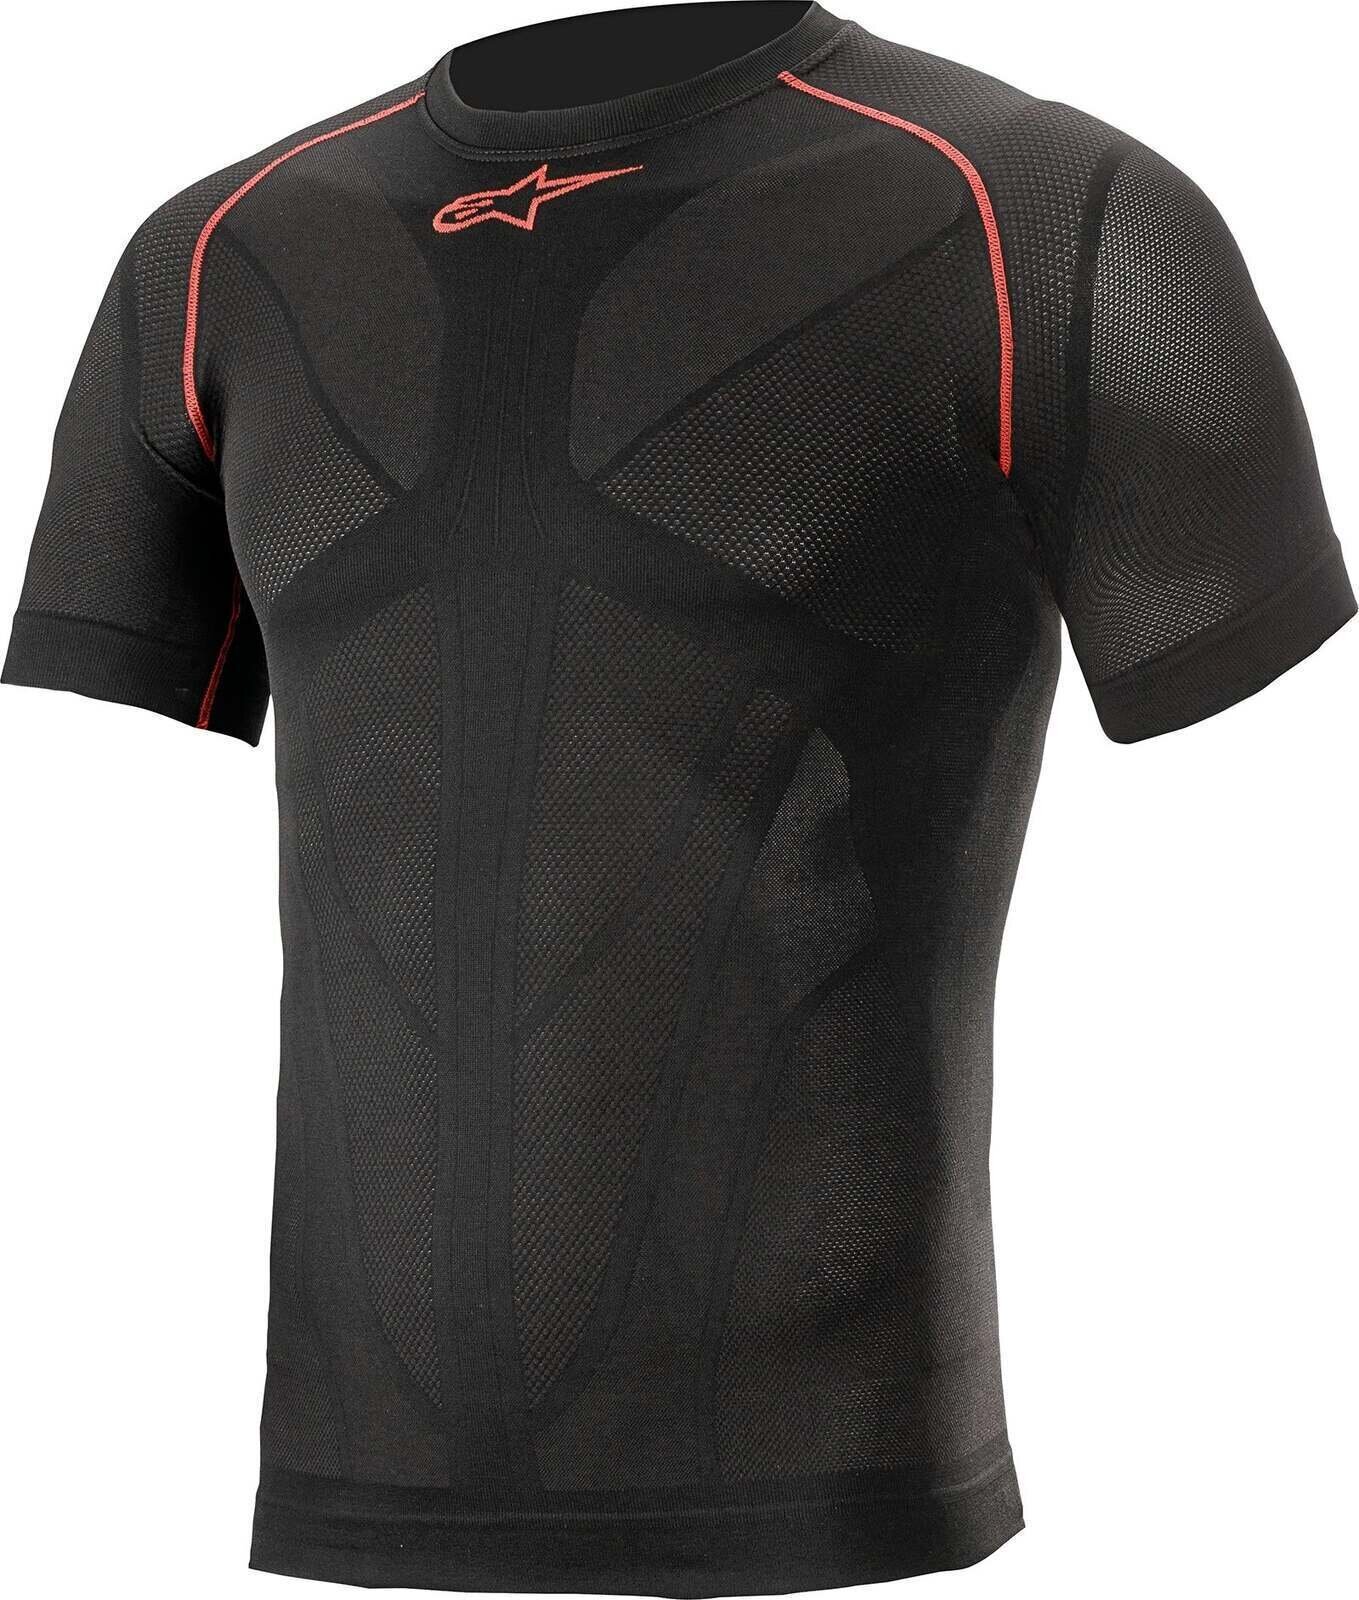 Motorcycle Functional Shirt Alpinestars Ride Tech V2 Top Short Sleeve Summer Black Red XS/S